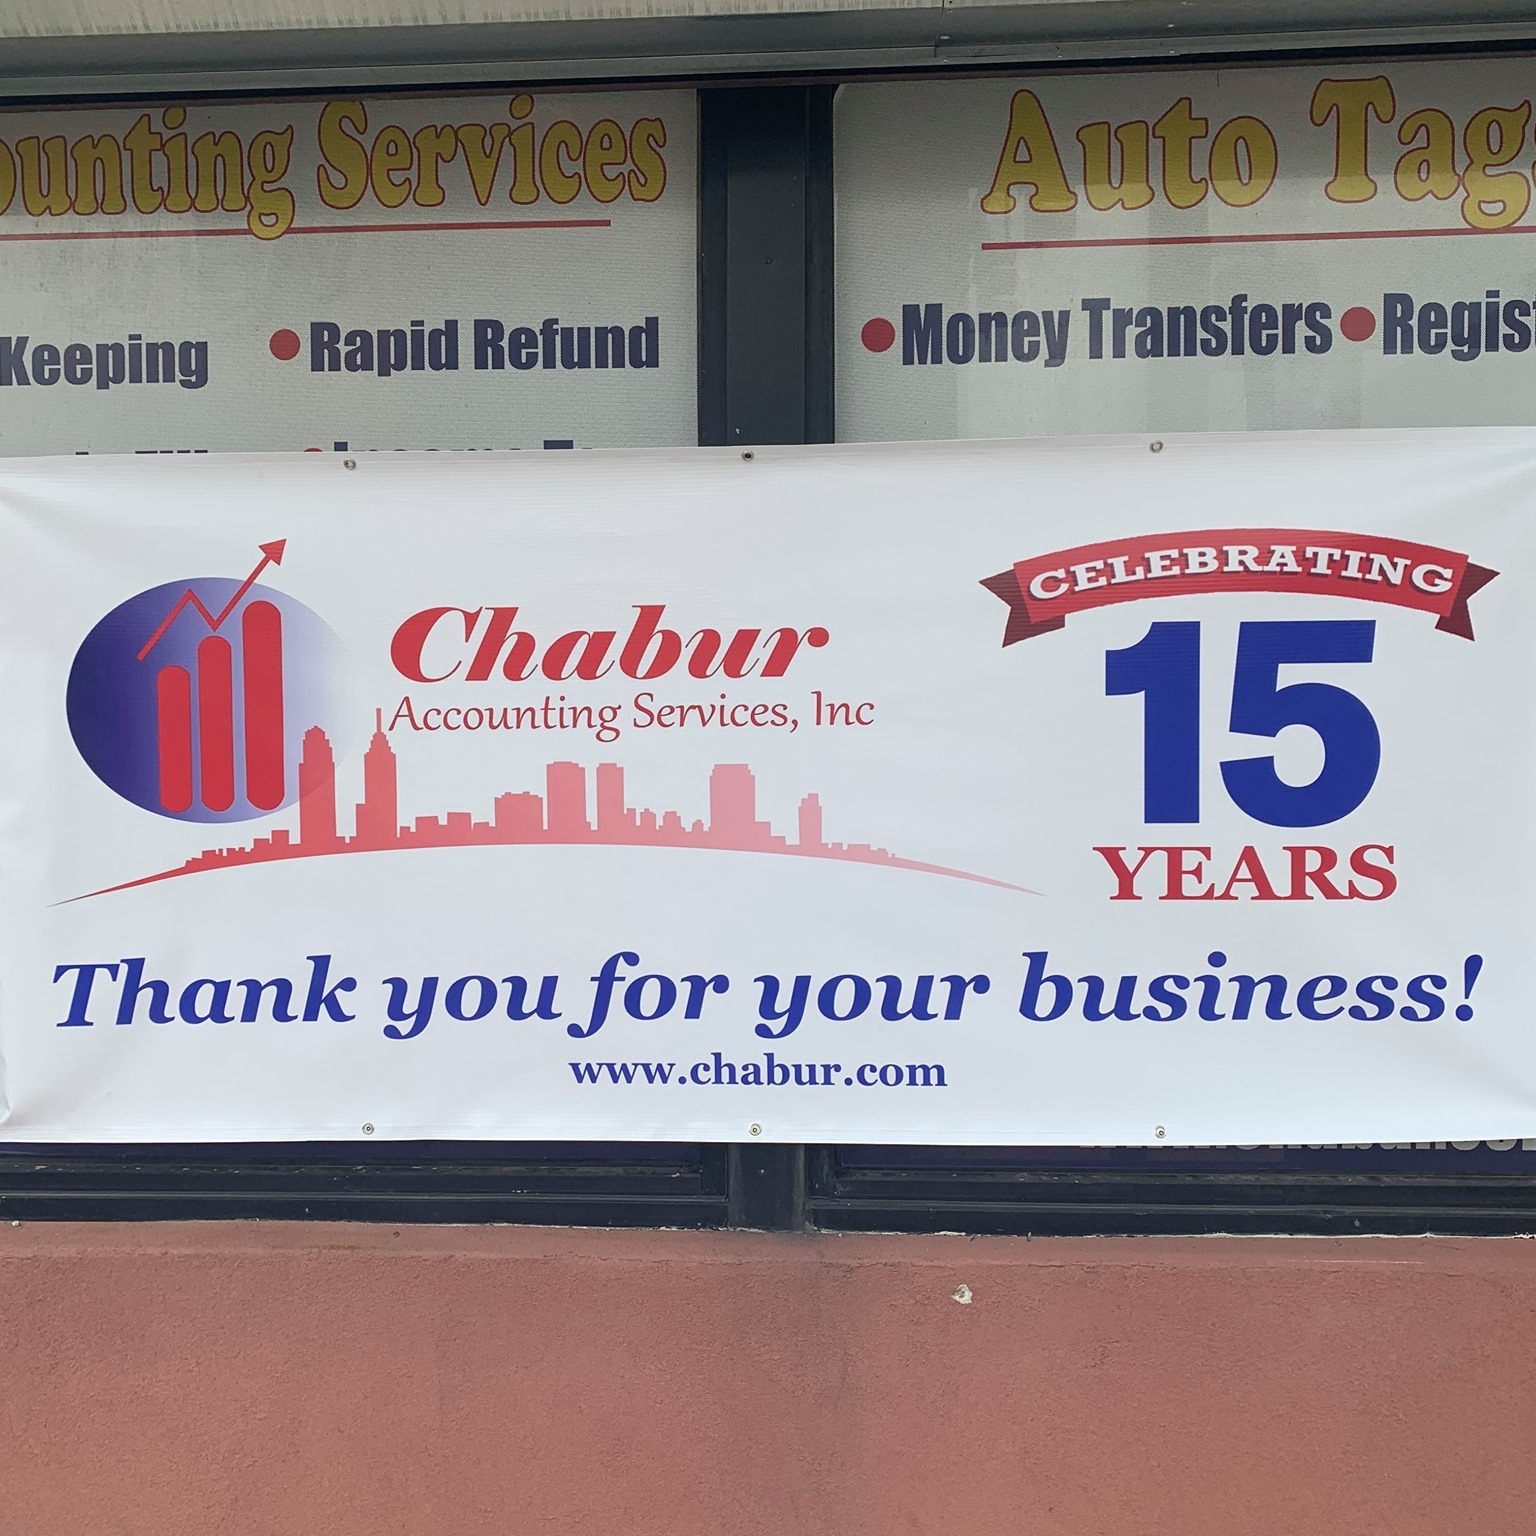 Chabur Accounting Services Inc.